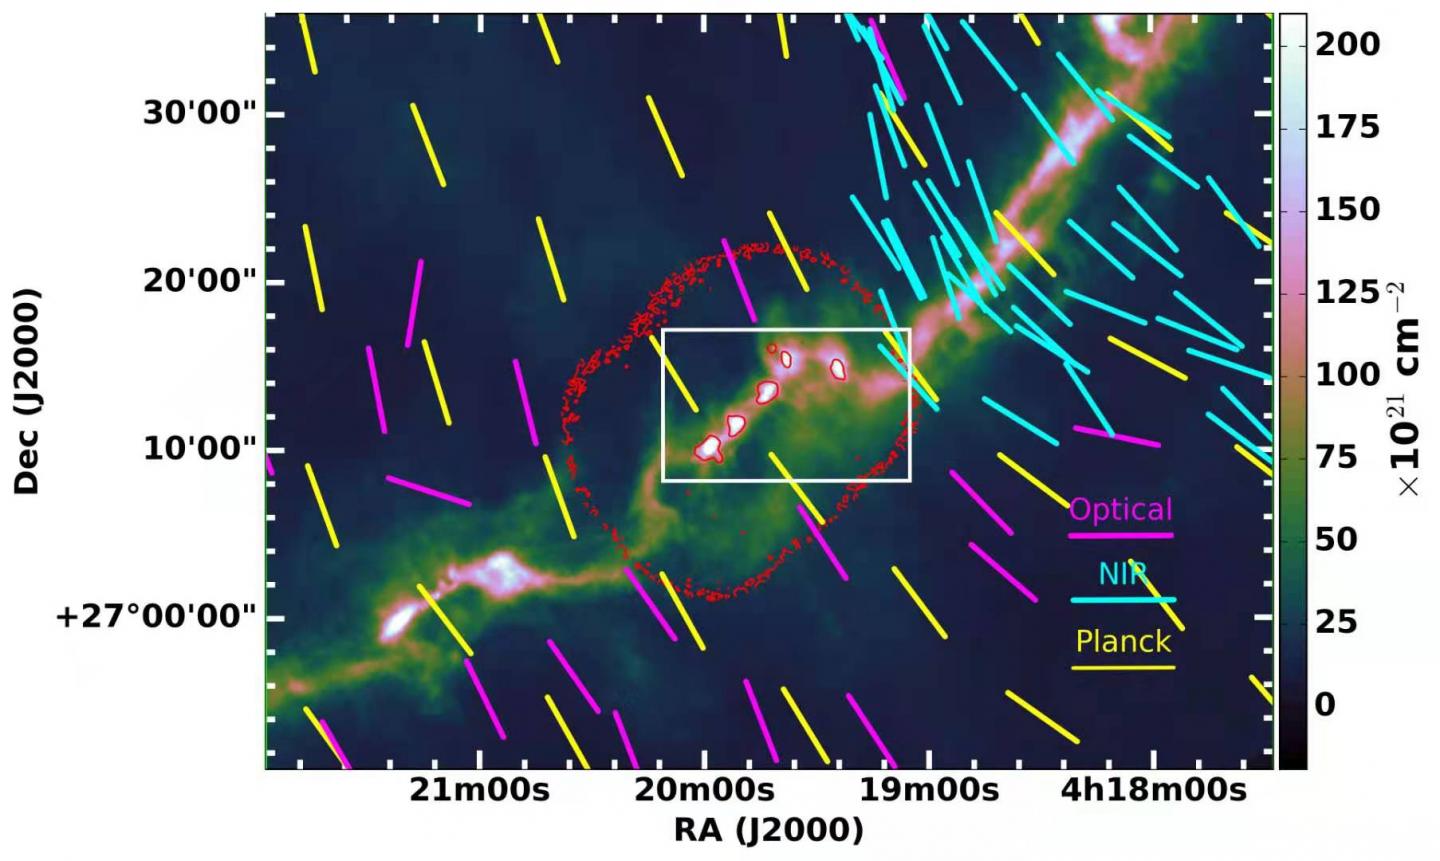 Large-scale, uniform magnetic field morphology of Taurus/B213 region, inferred based on multi-wavelength polarization data.